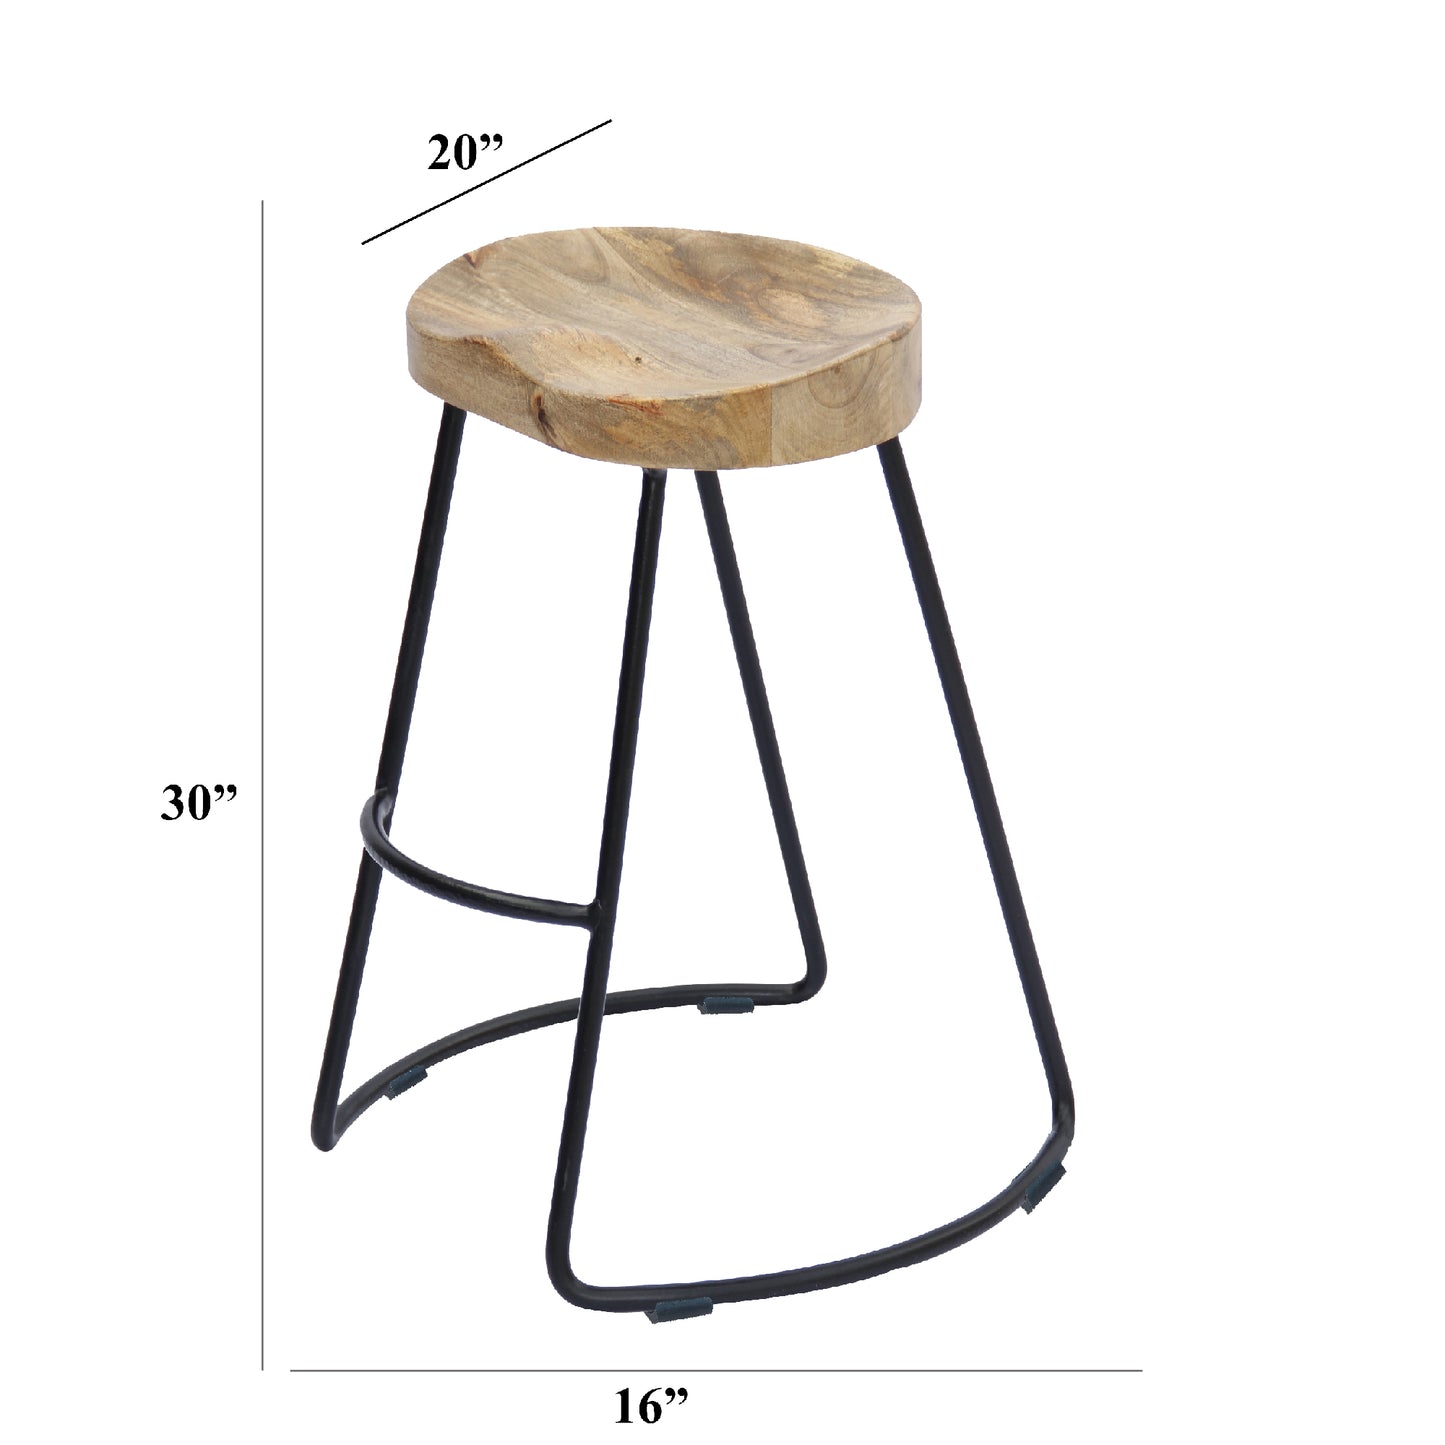 Wooden Saddle Seat Bar Stool With Tubular Metal Base Small, Brown And Black, Set Of 2